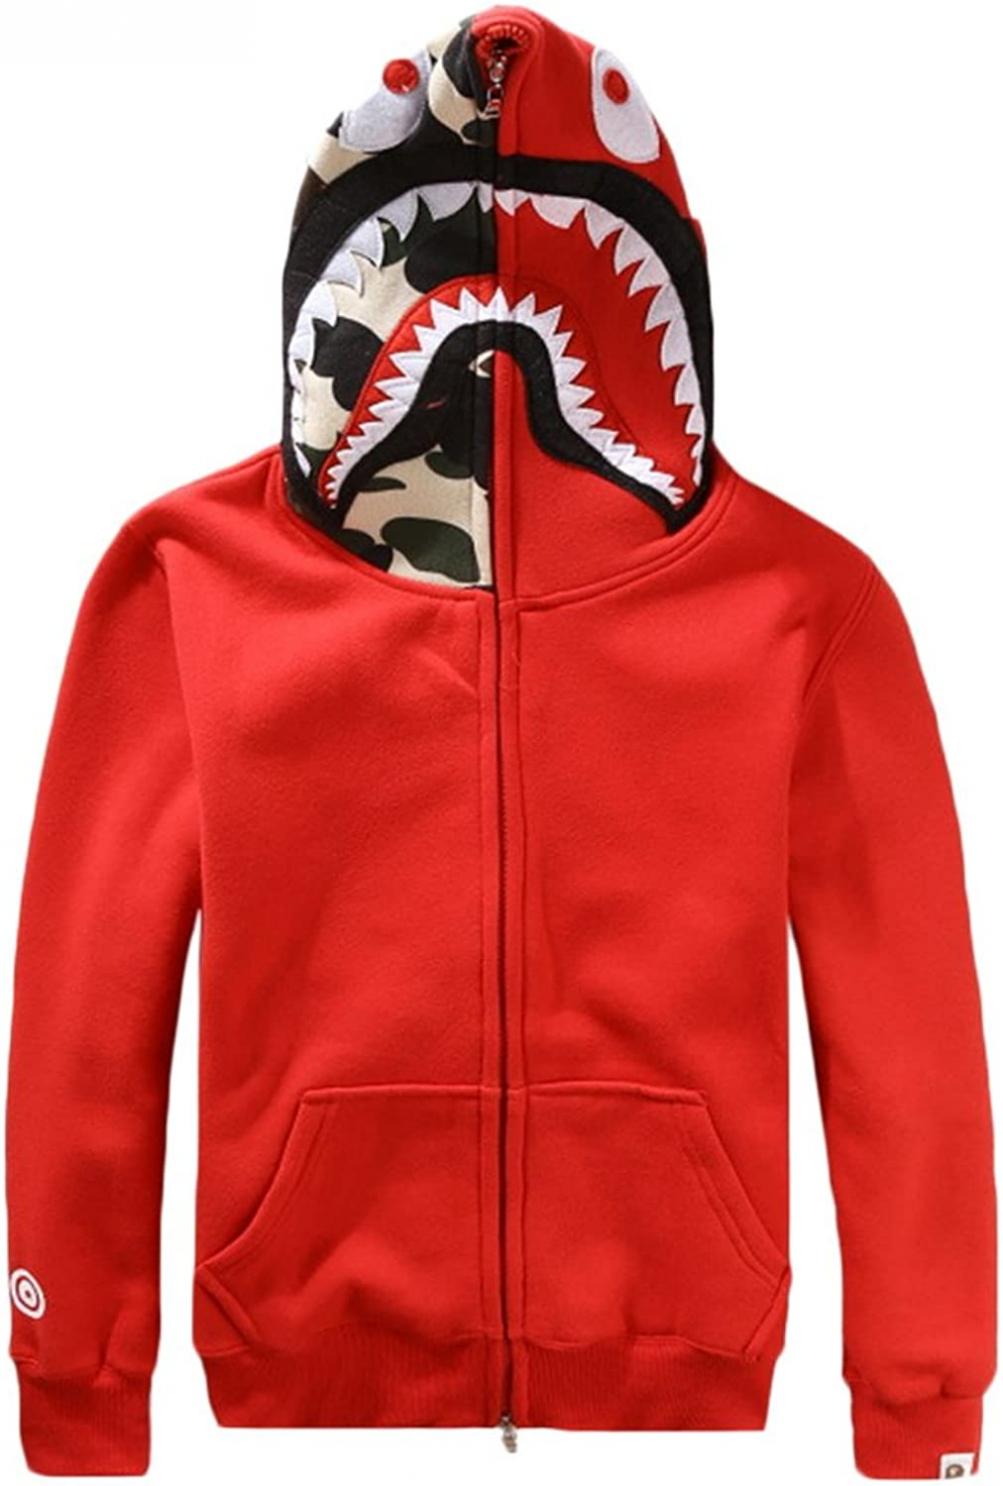 Imilan Camo Hoodie Shark Mouth Jacket Full Zip Up Sweatershirt for Men Women